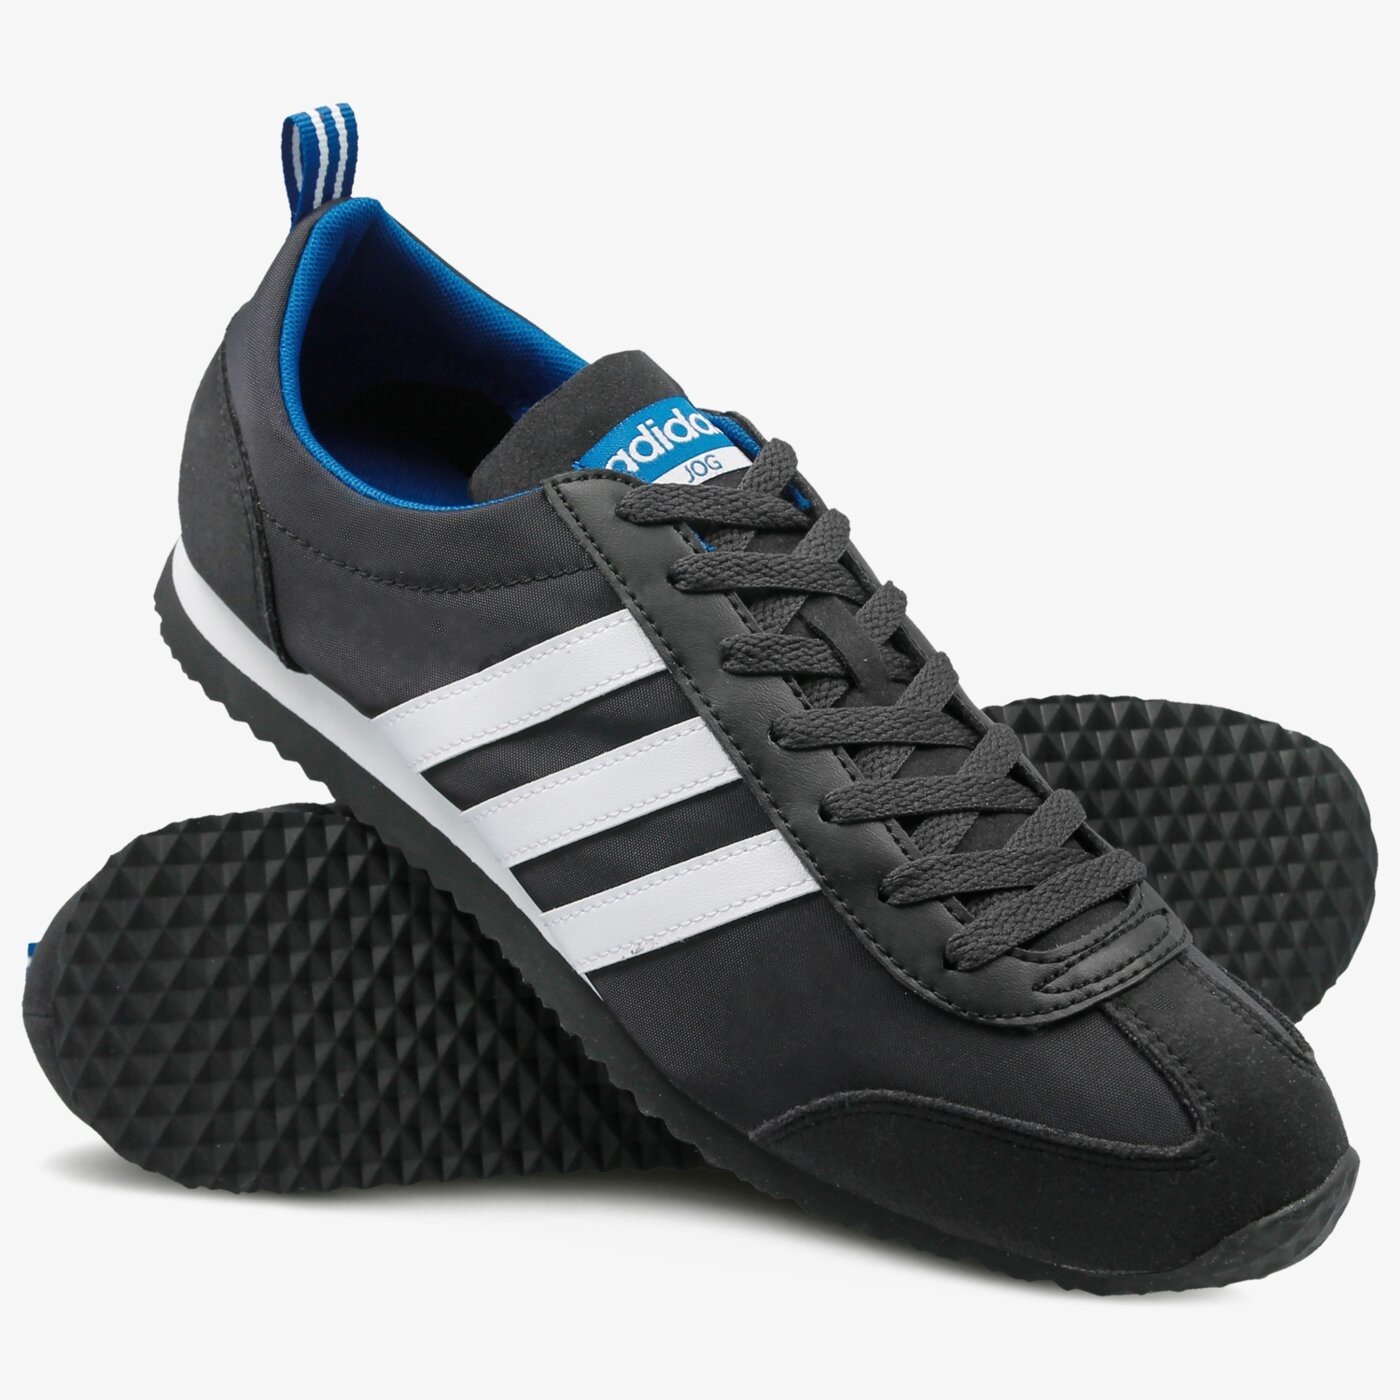 Zapatilla Adidas JOG DB0464 Sports